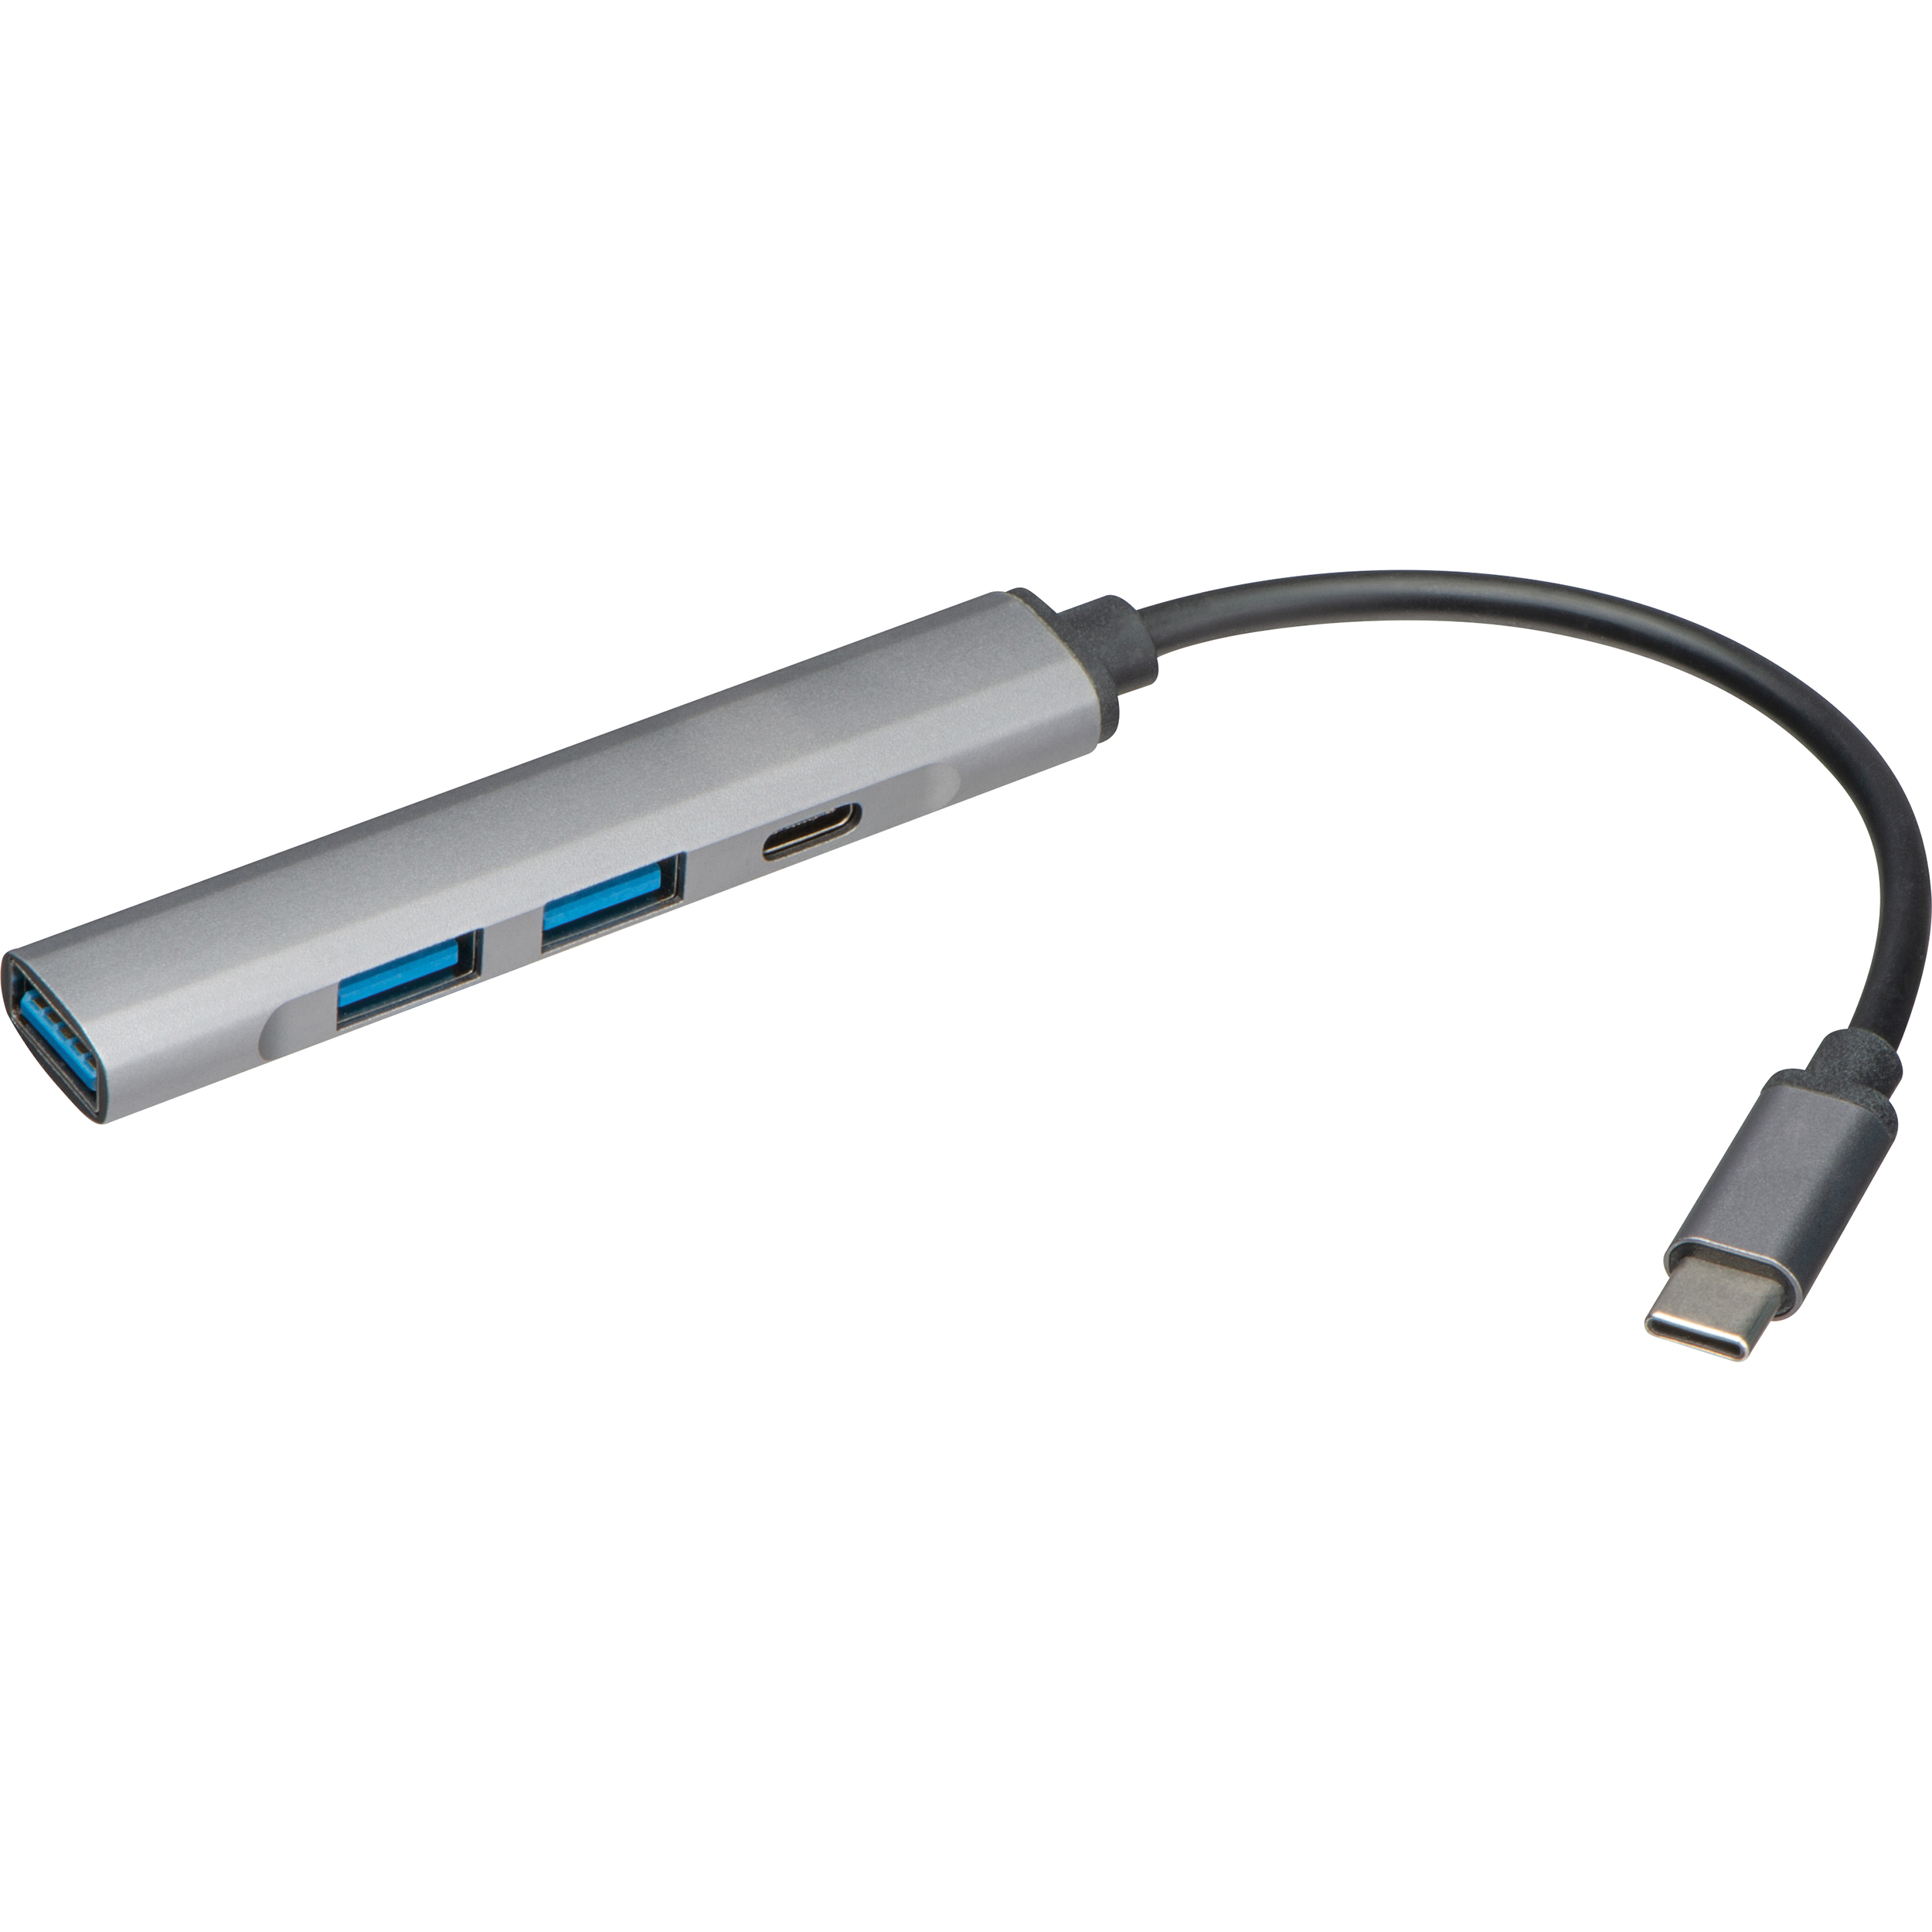 USB Hub aus recyceltem Aluminium